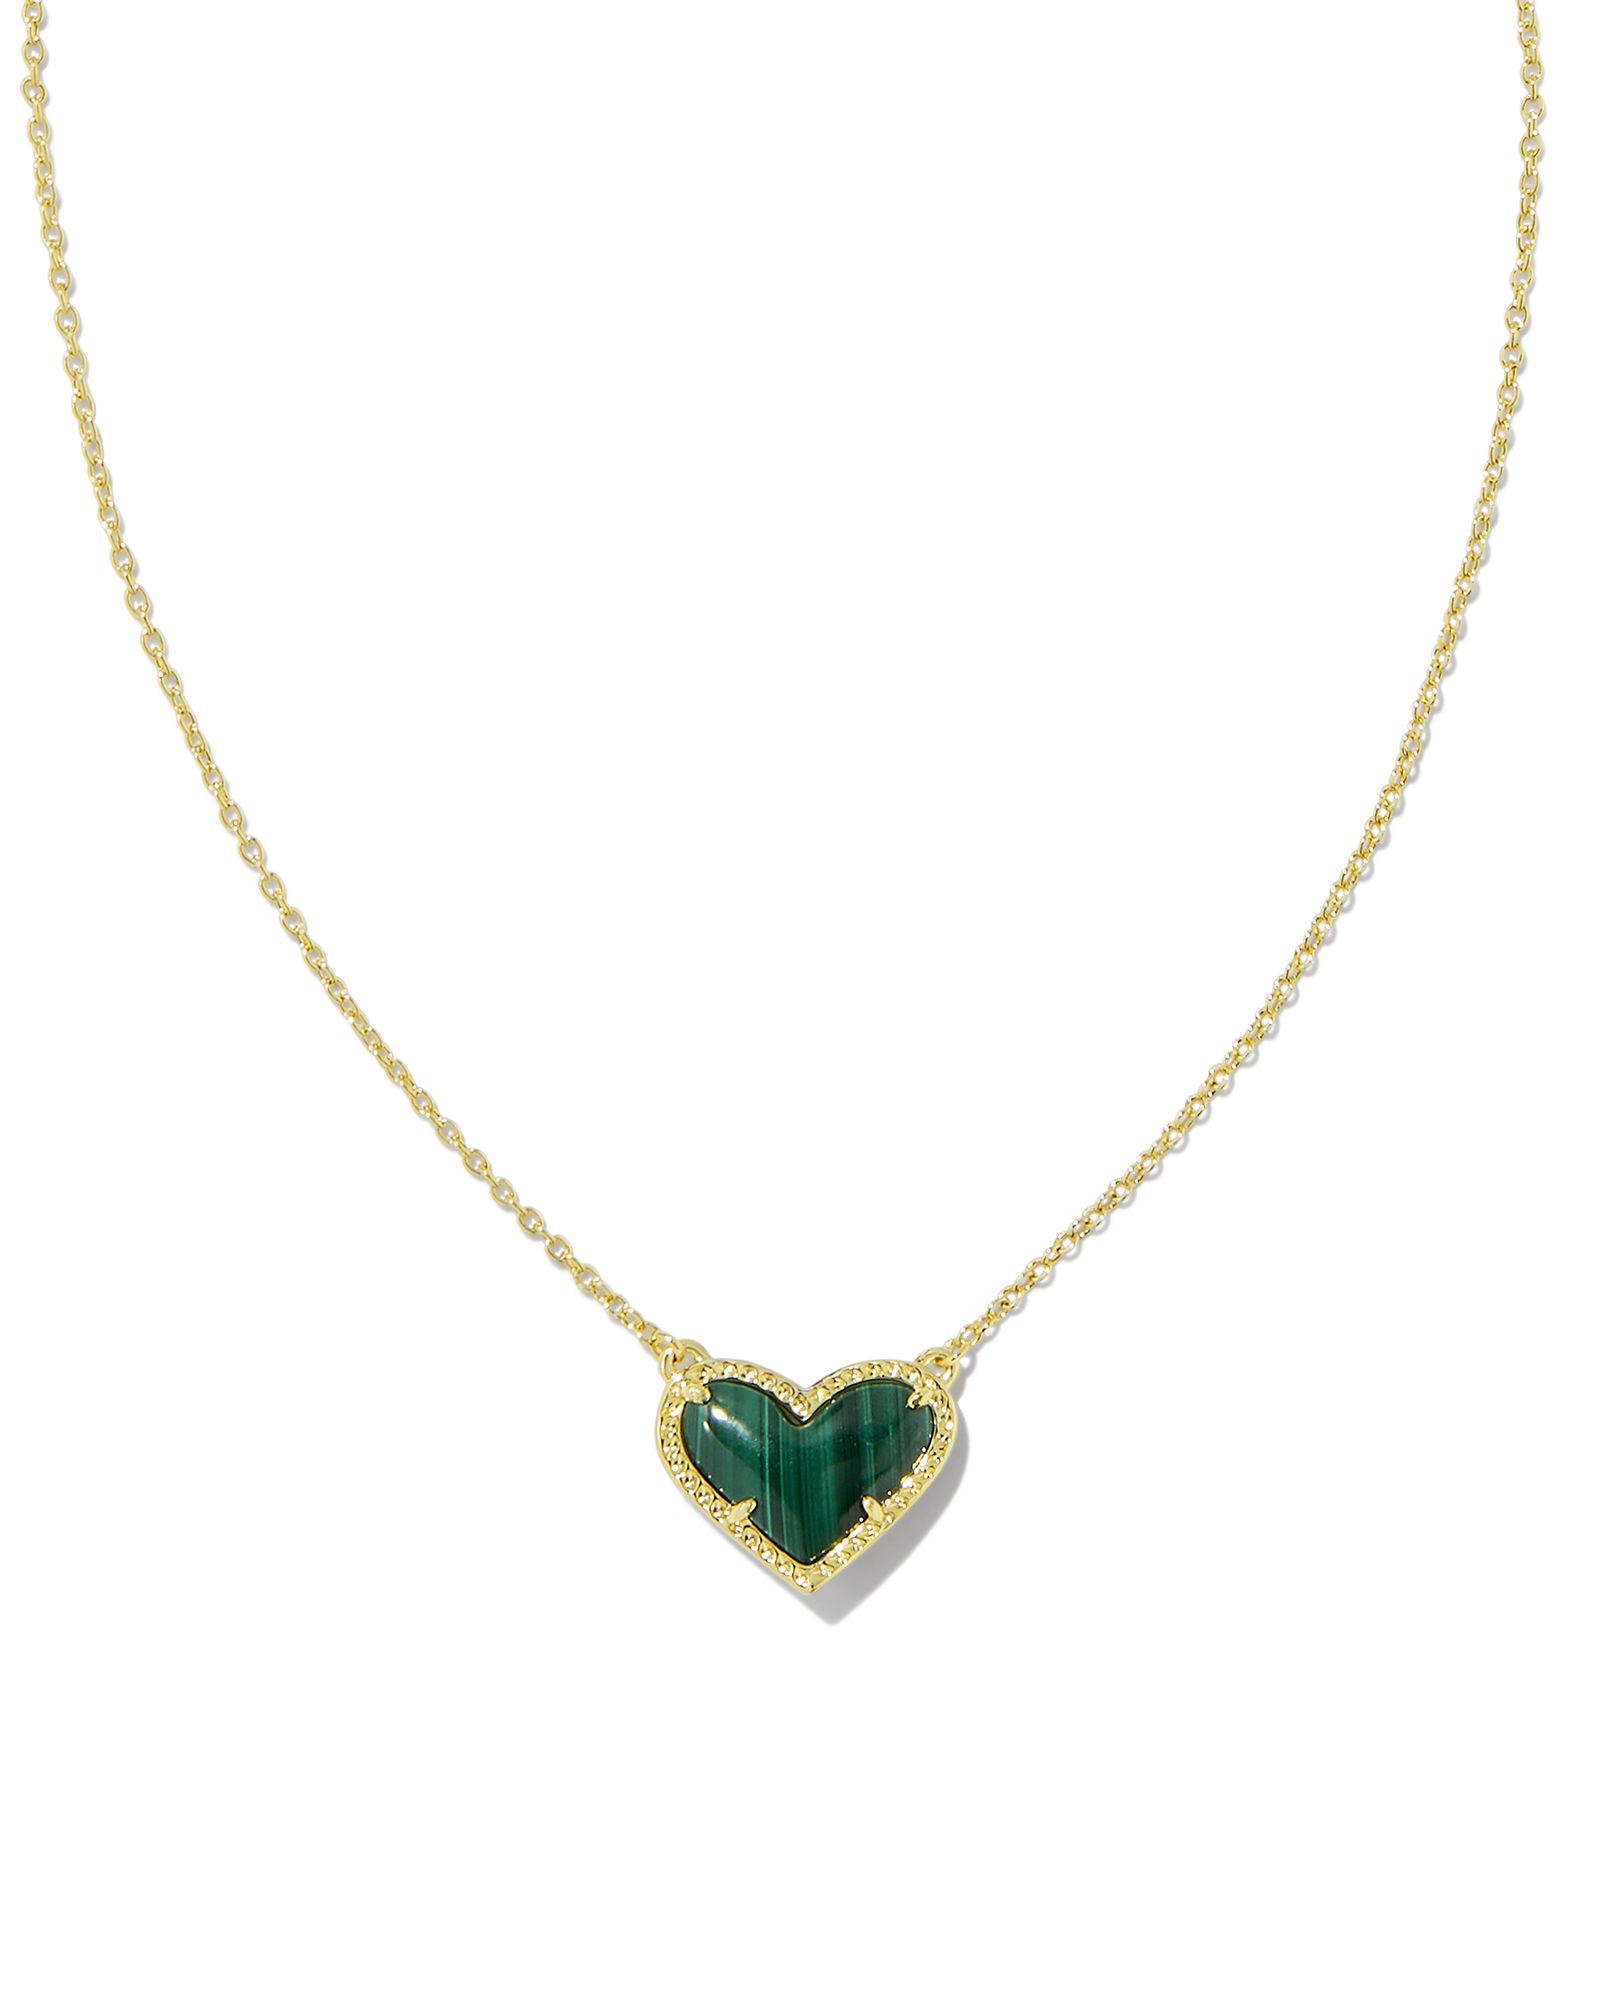 Ari Heart Gold Pendant Necklace in Green Malachite | Kendra Scott